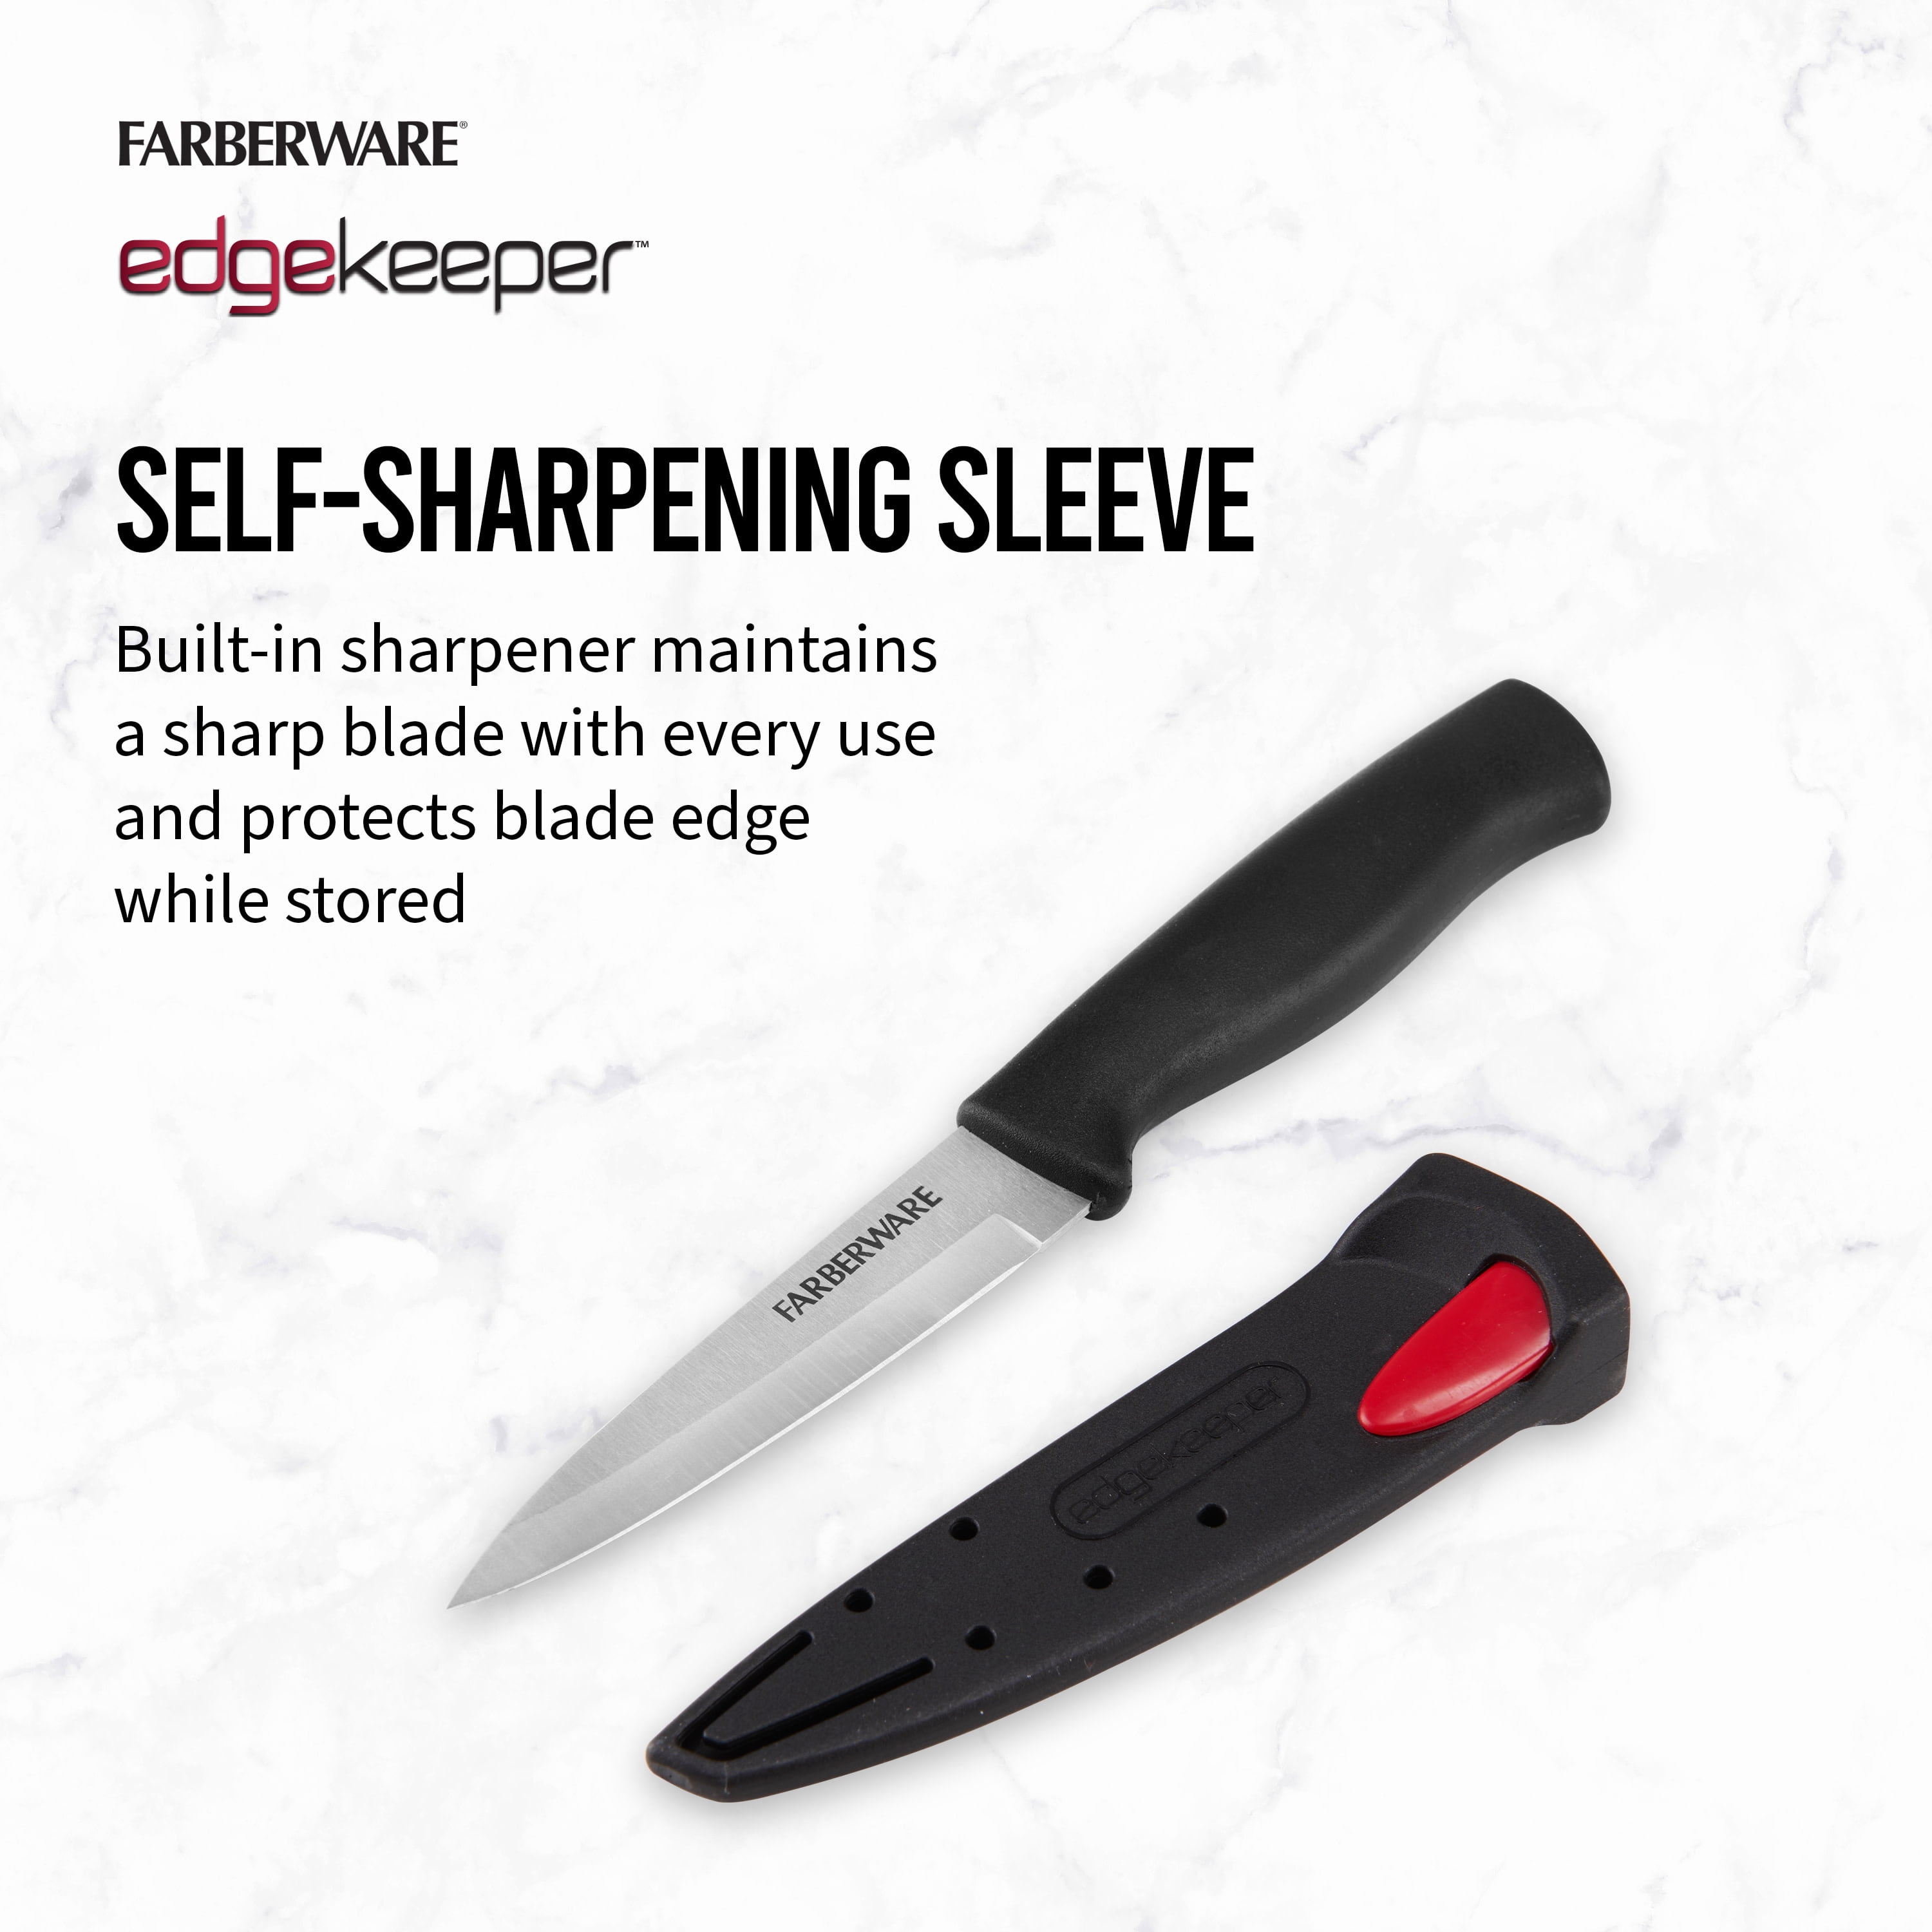 Farberware Edgekeeper З 1/2 Inch Paring Knife with Self Sharpening Sleeve